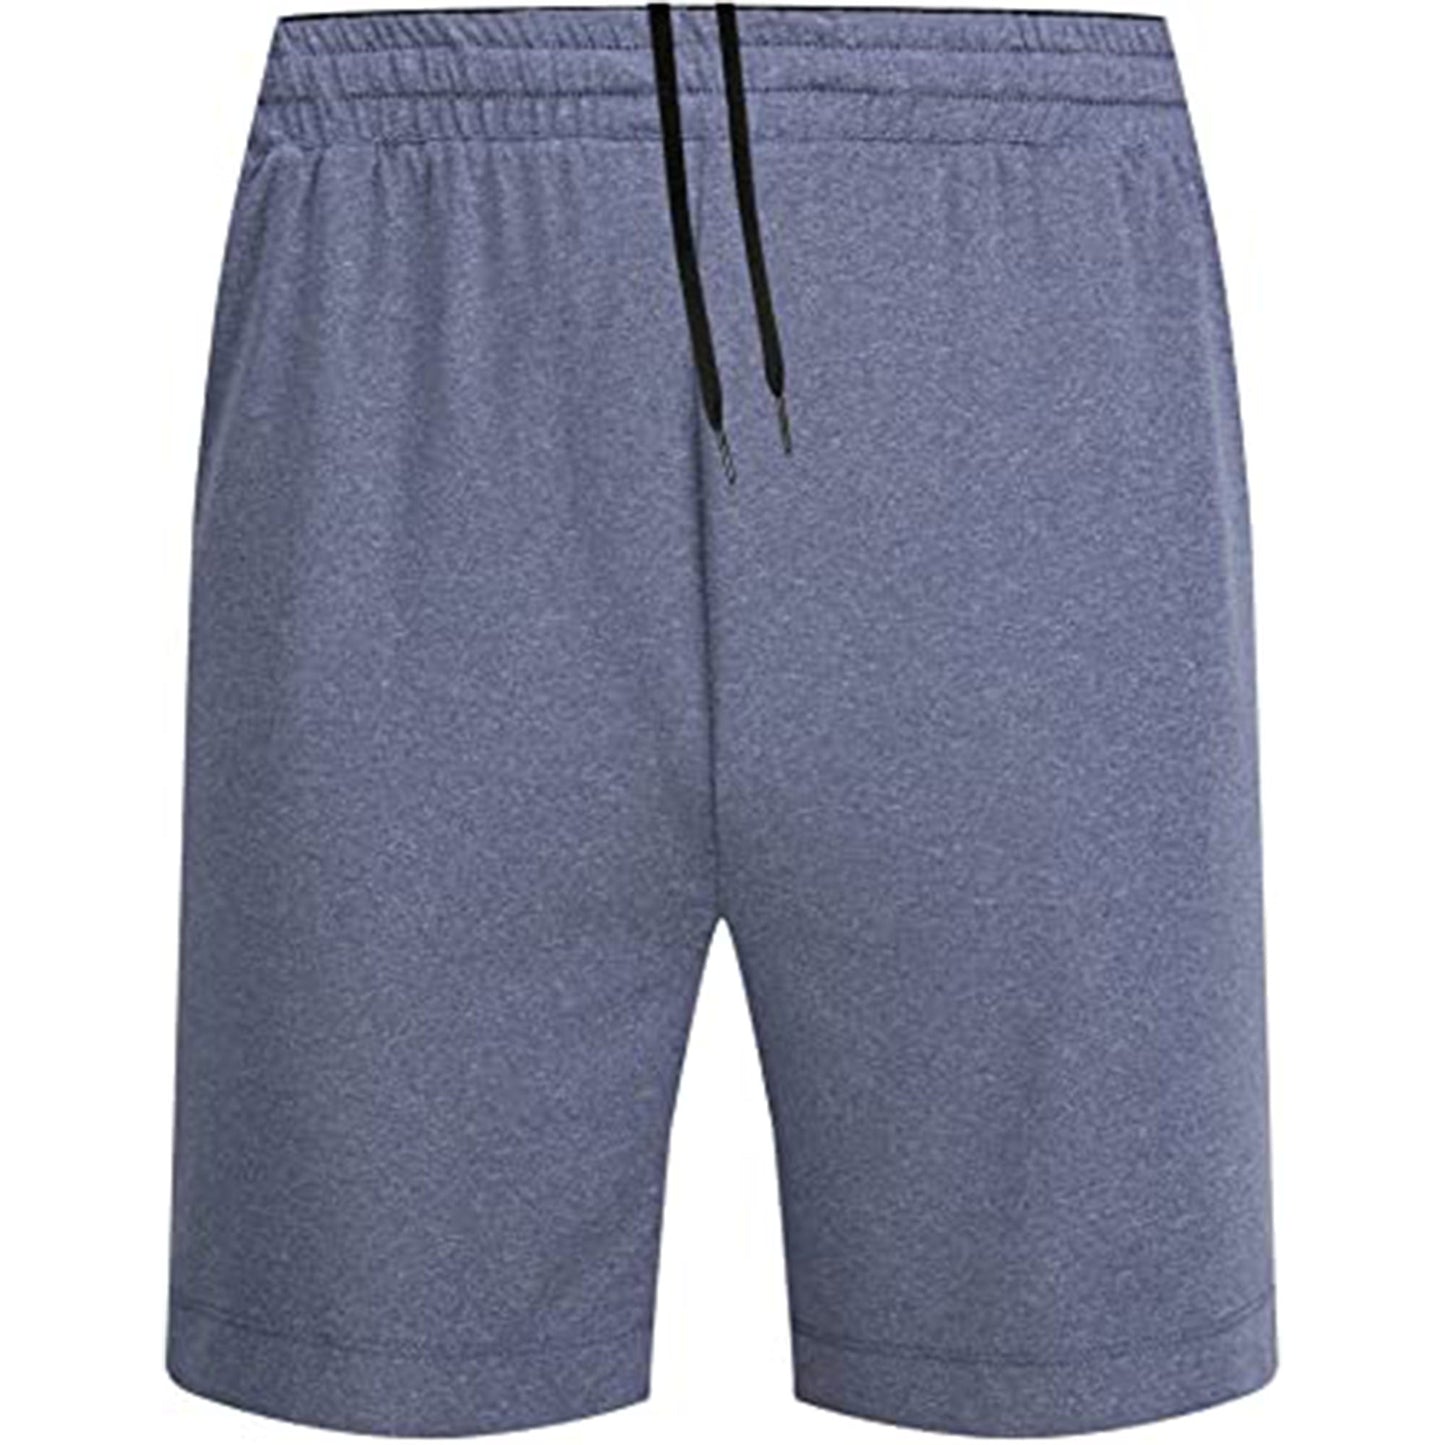 Azlax Grey Mens Shorts